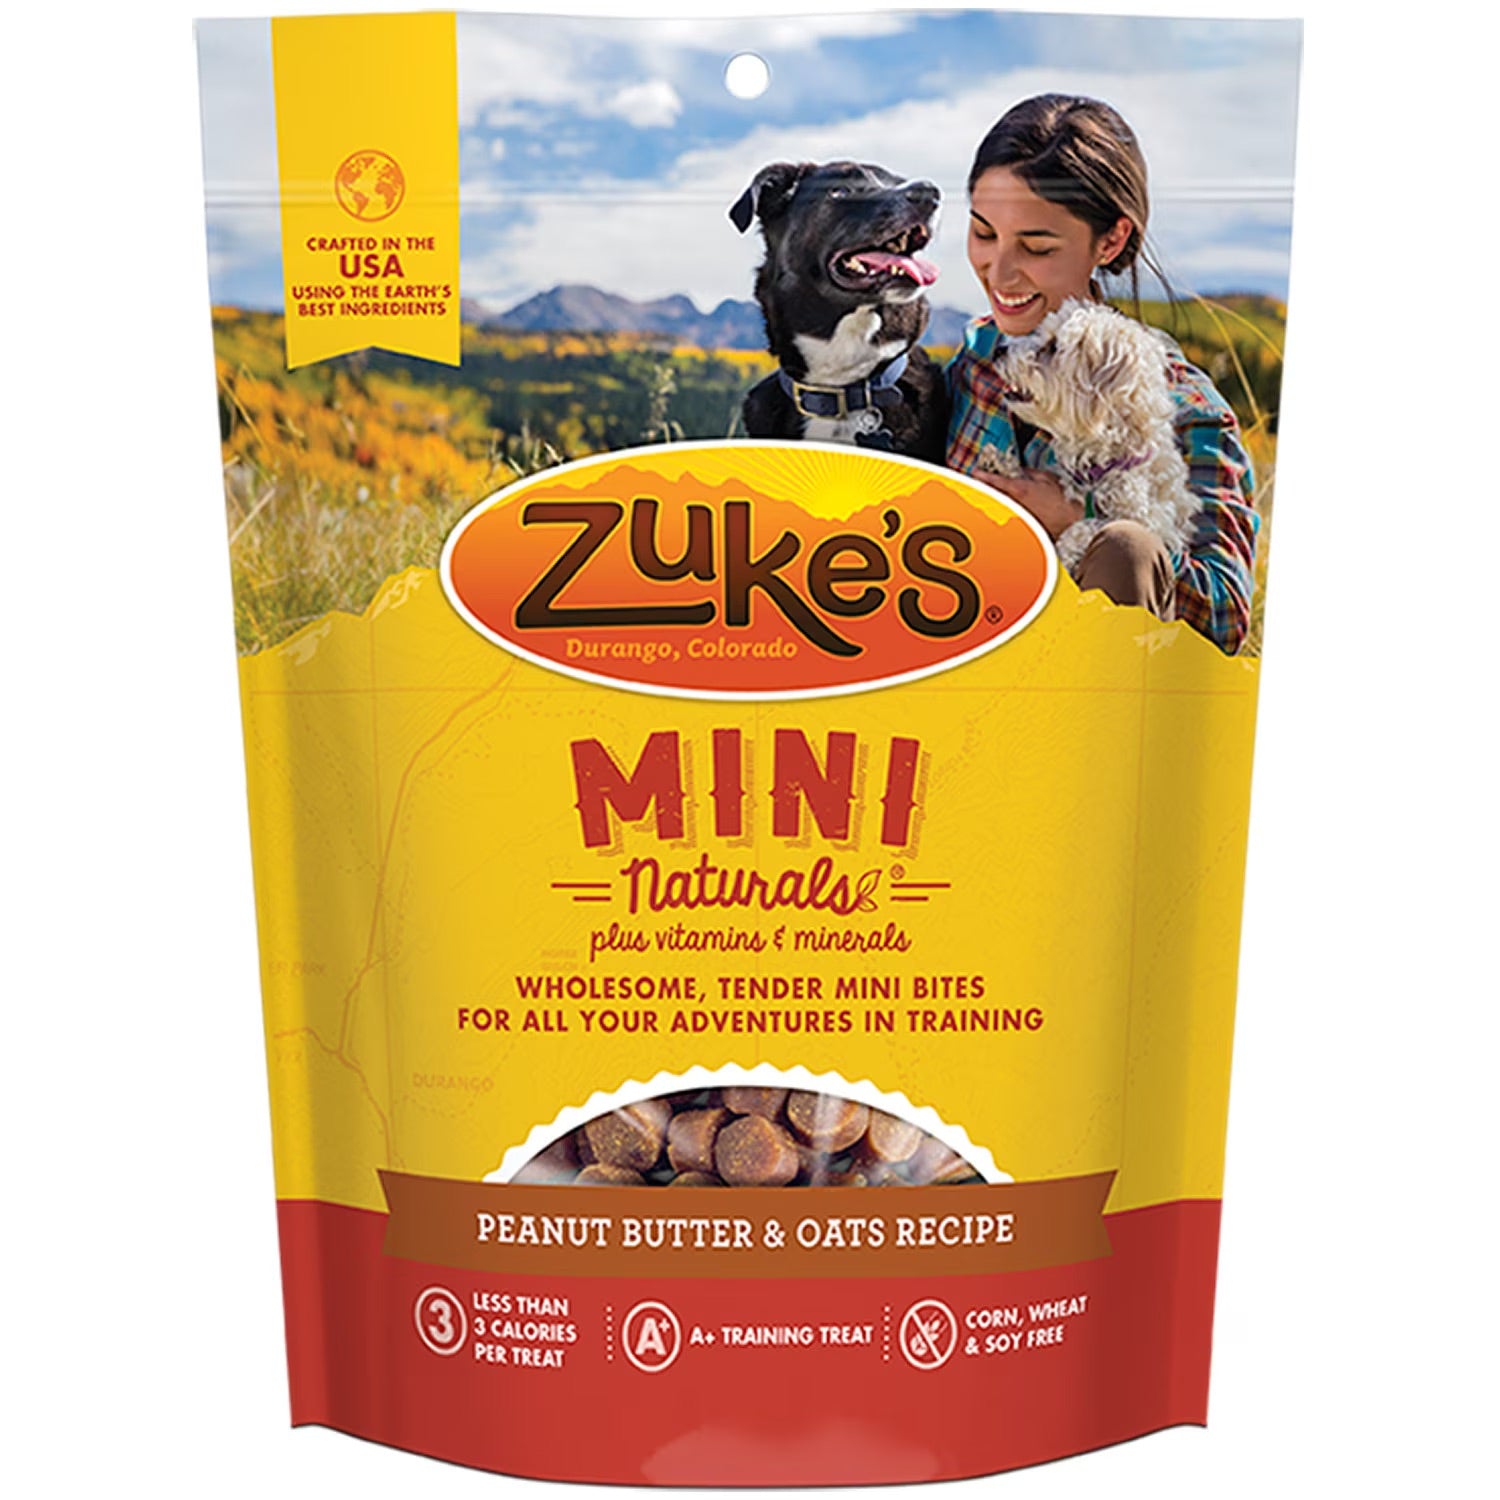 Zuke’s Mini Naturals Wholesome, Tender Mini Bites, Peanut Butter & Oats Recipe, 16oz